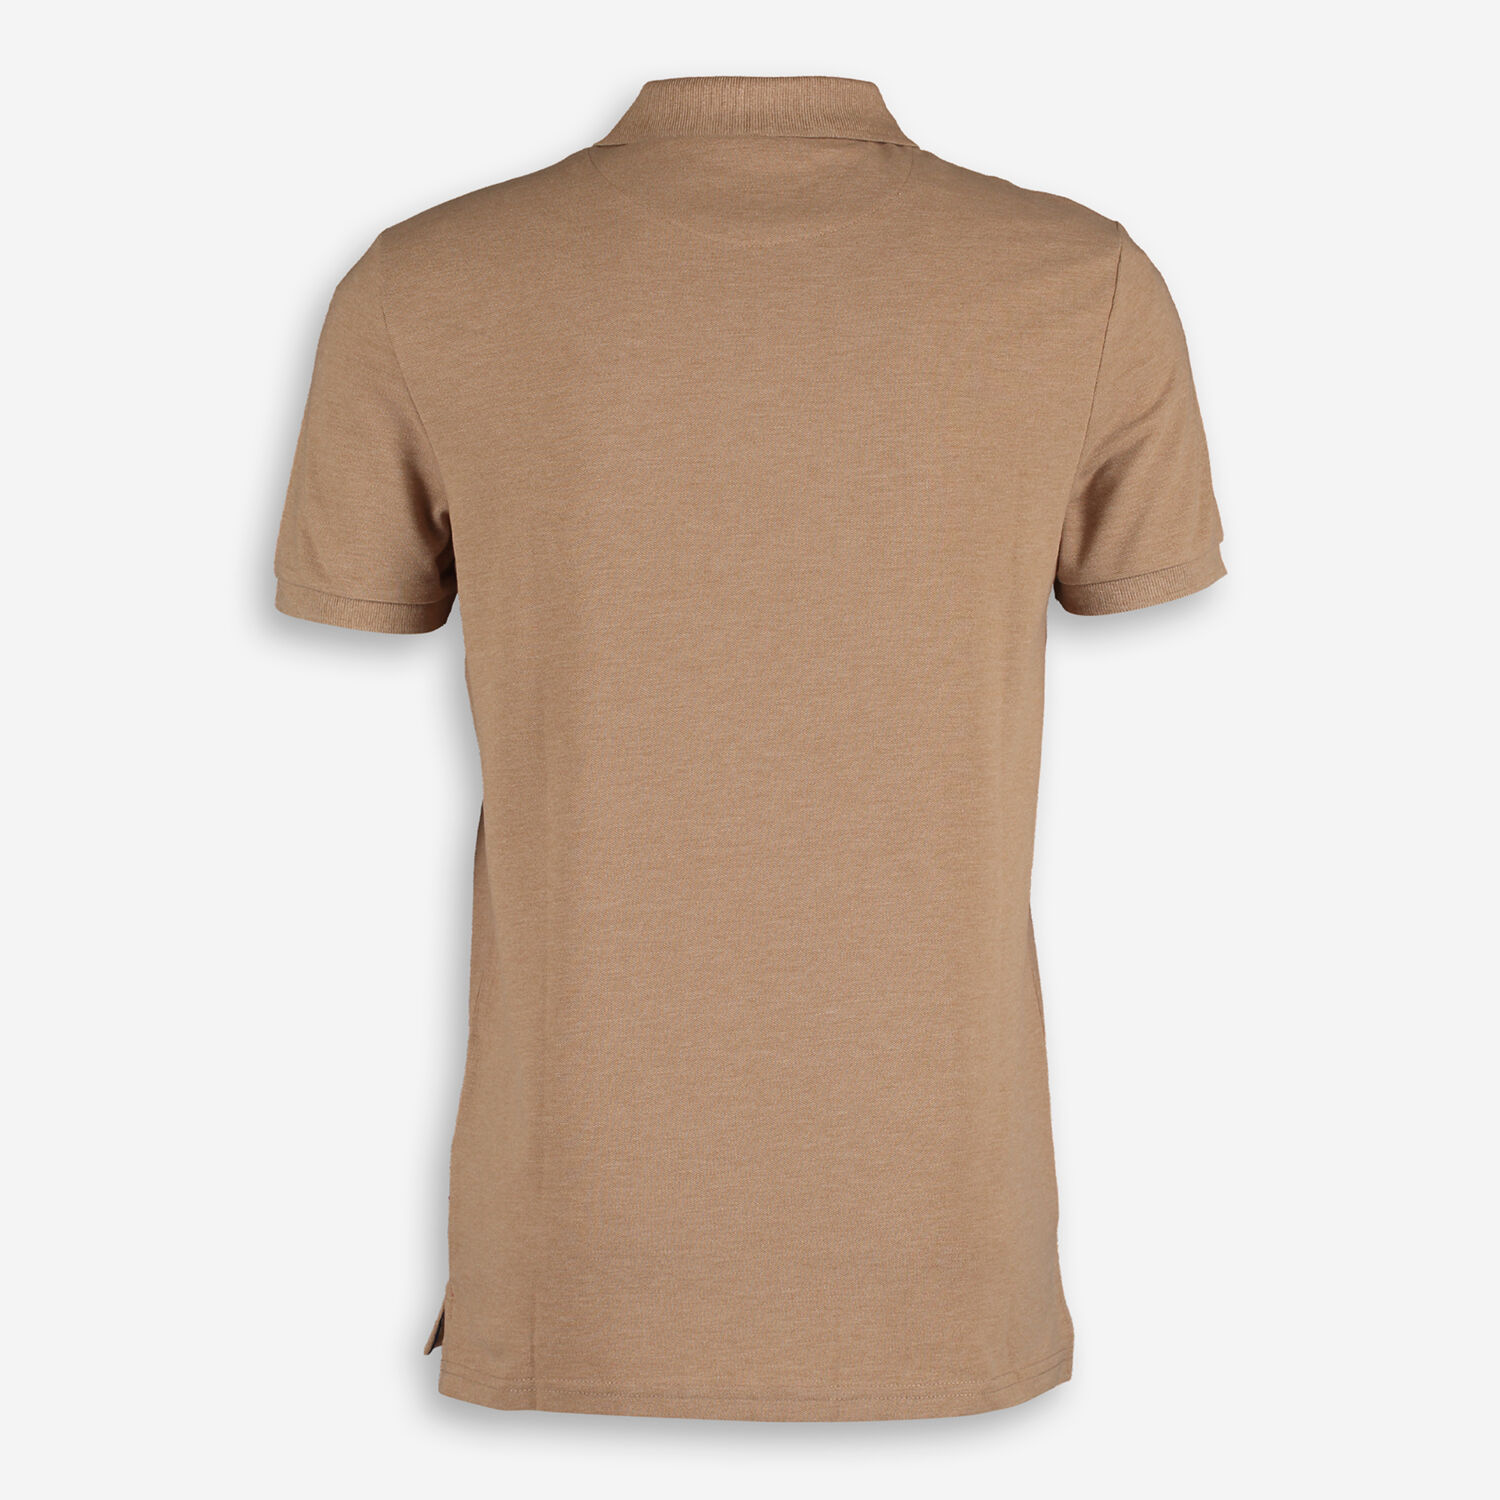 Brown Polo Shirt - TK Maxx UK